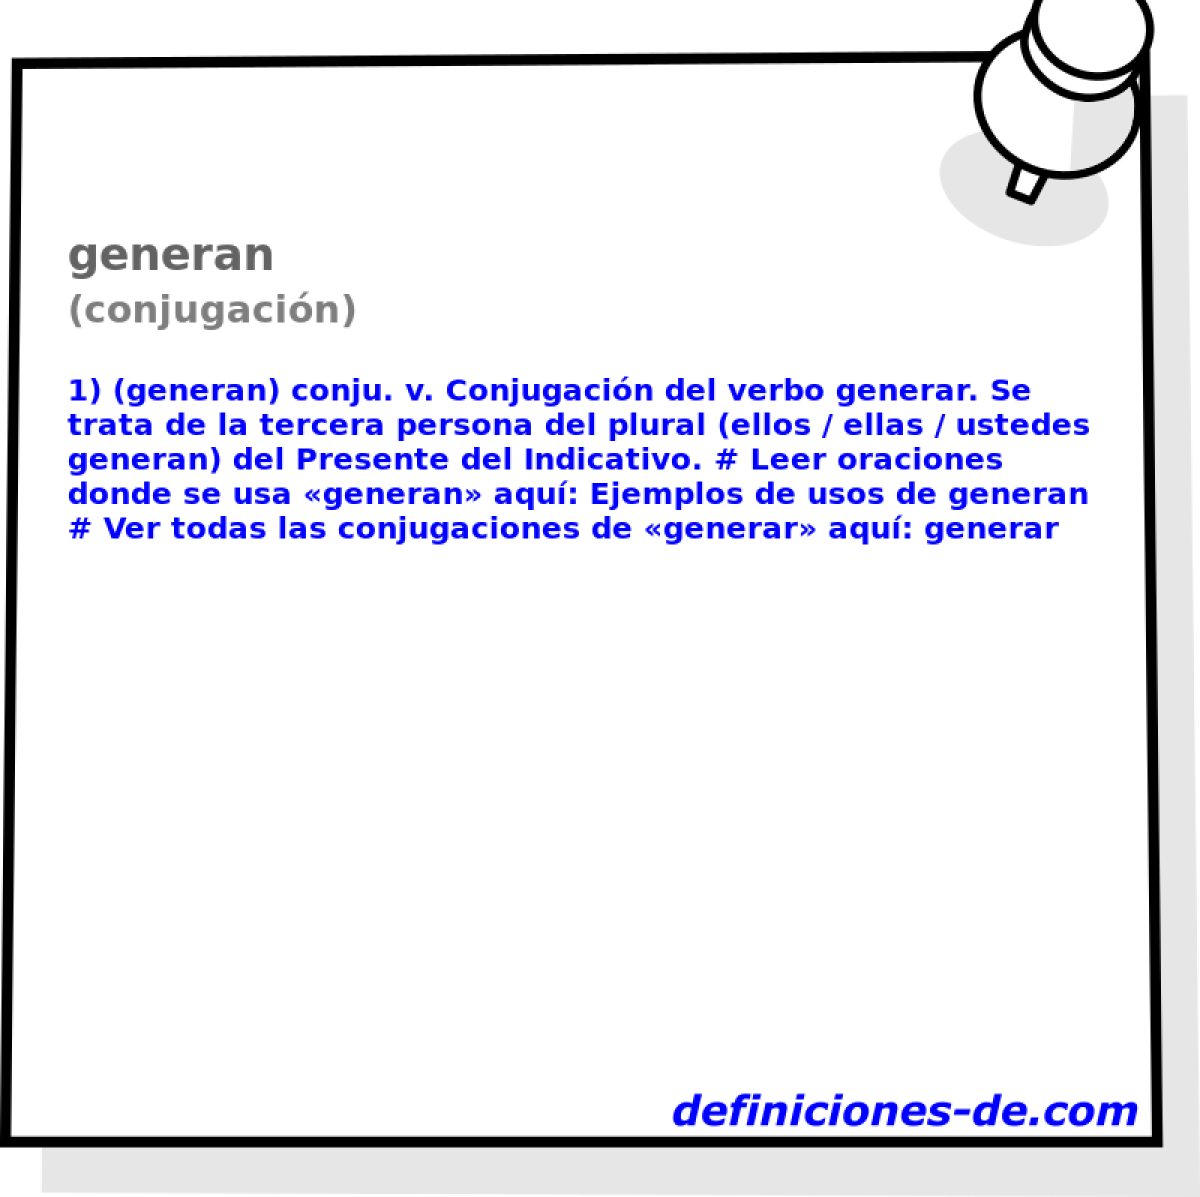 generan (conjugacin)